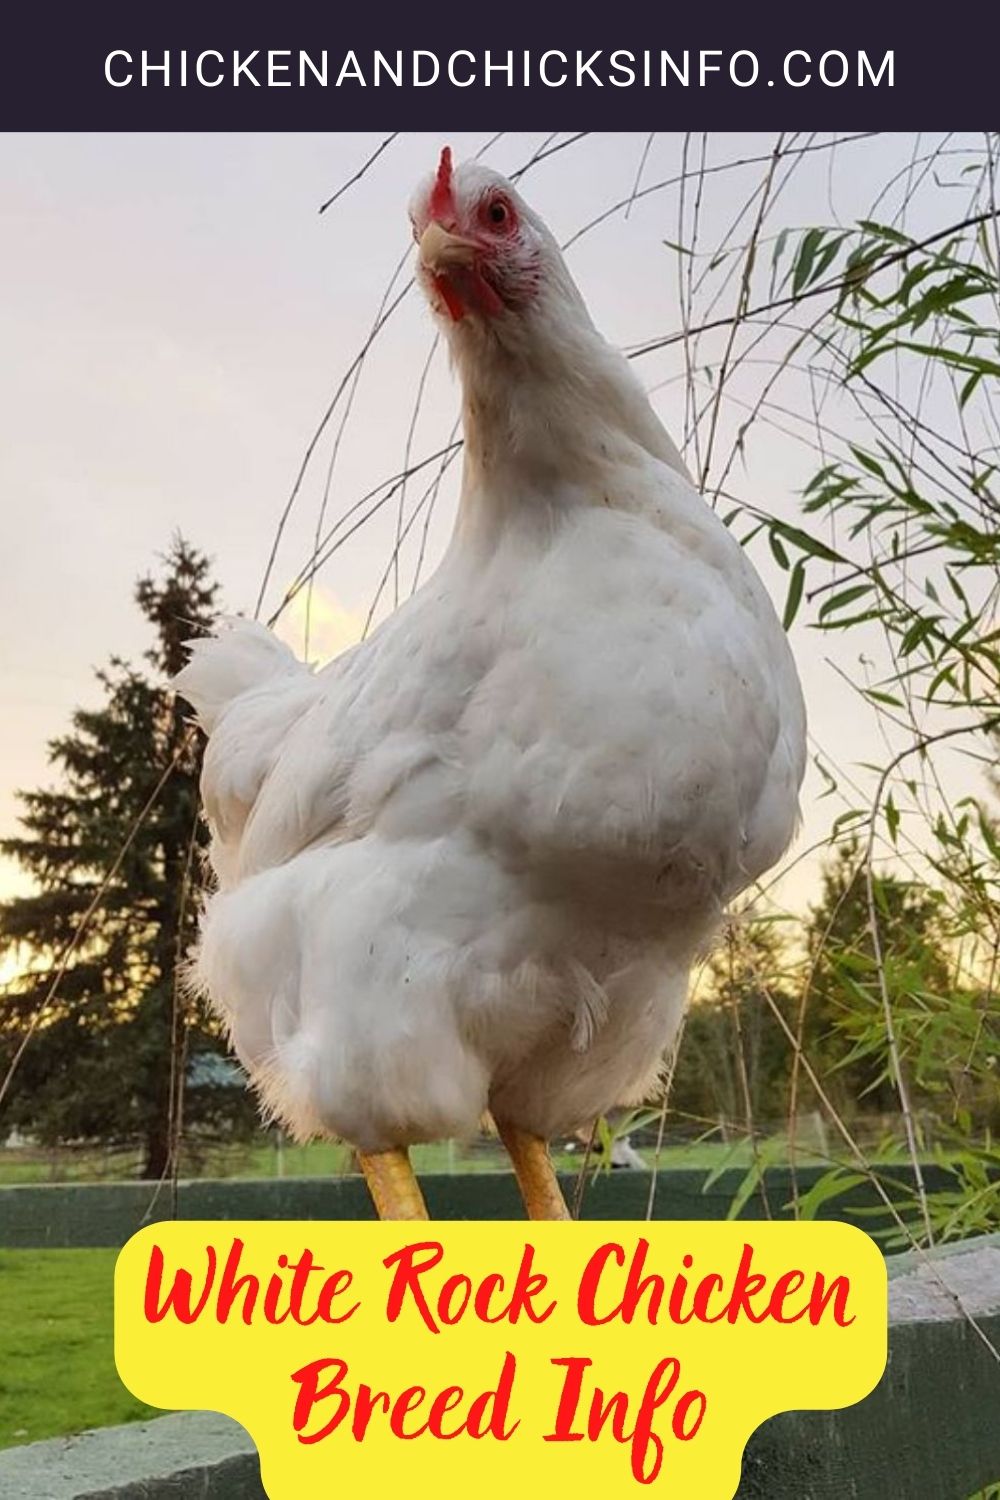 White Rock Chicken Breed Info pinterest image.